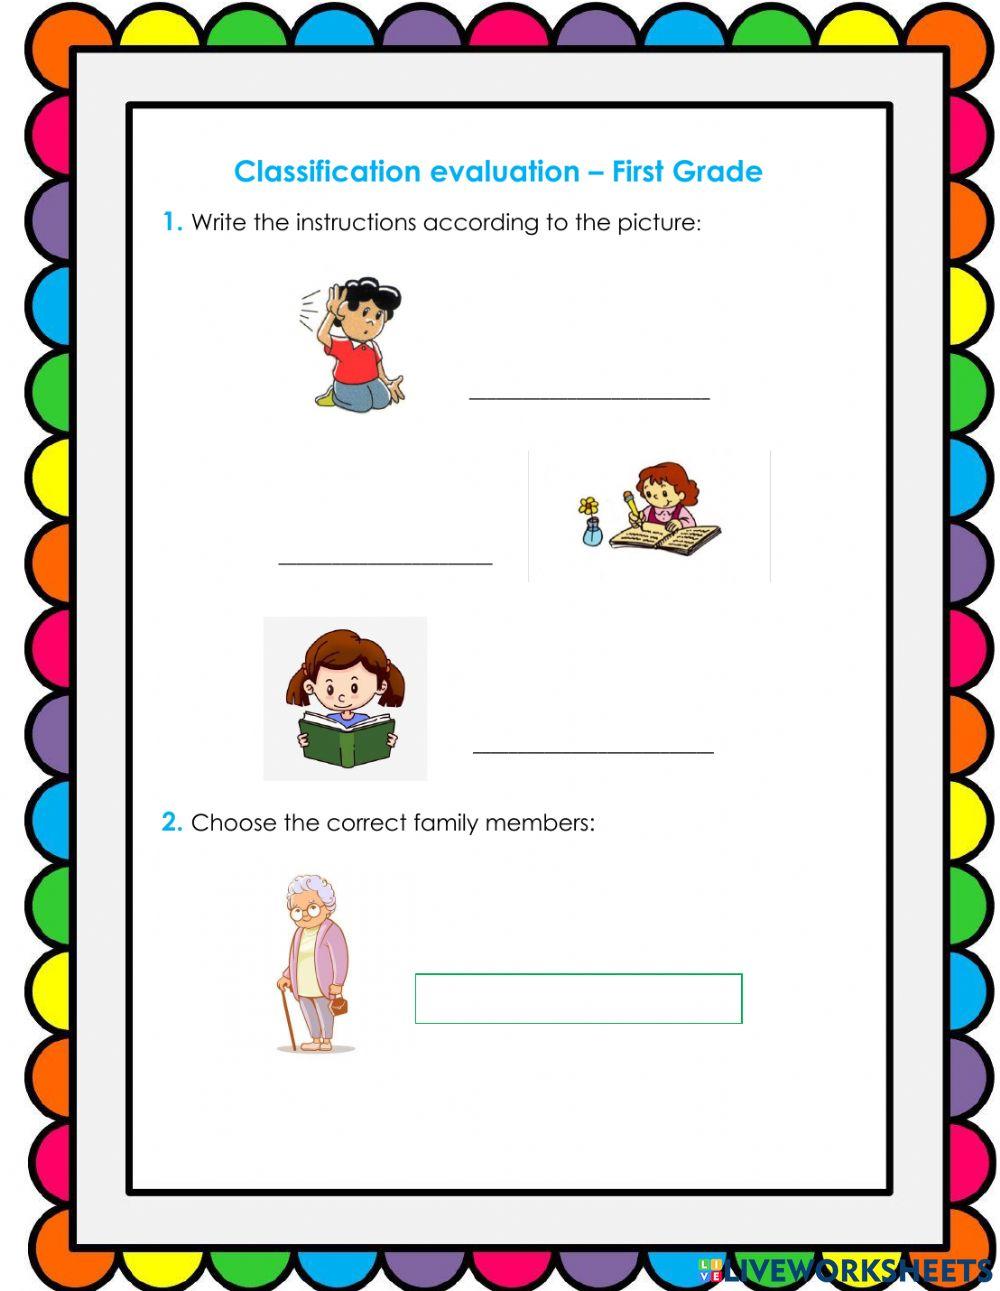 Classification evaluation